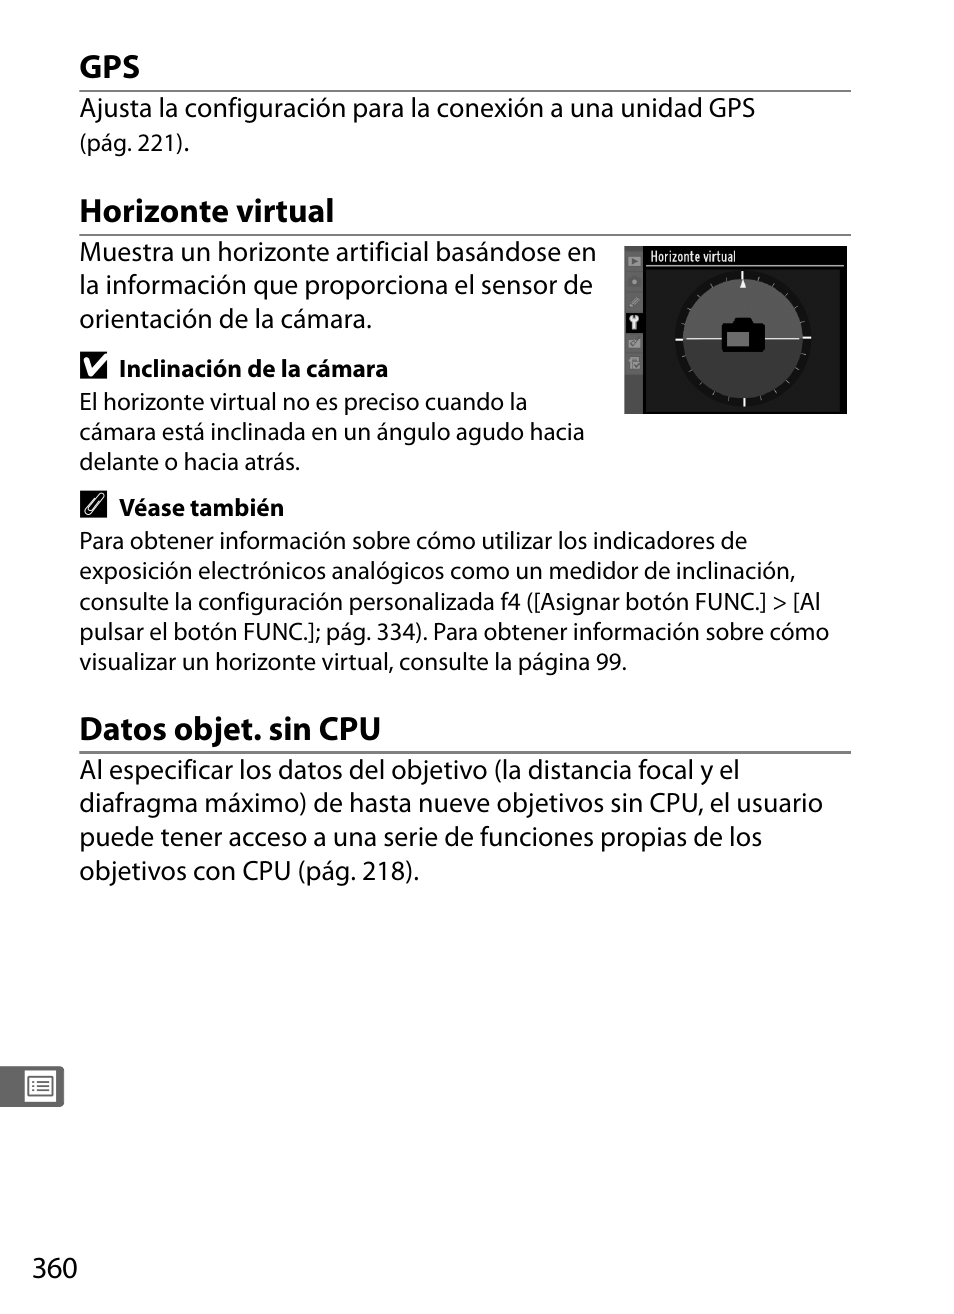 Horizonte virtual, Datos objet. sin cpu | Nikon D3X Manual del usuario | Página 386 / 476